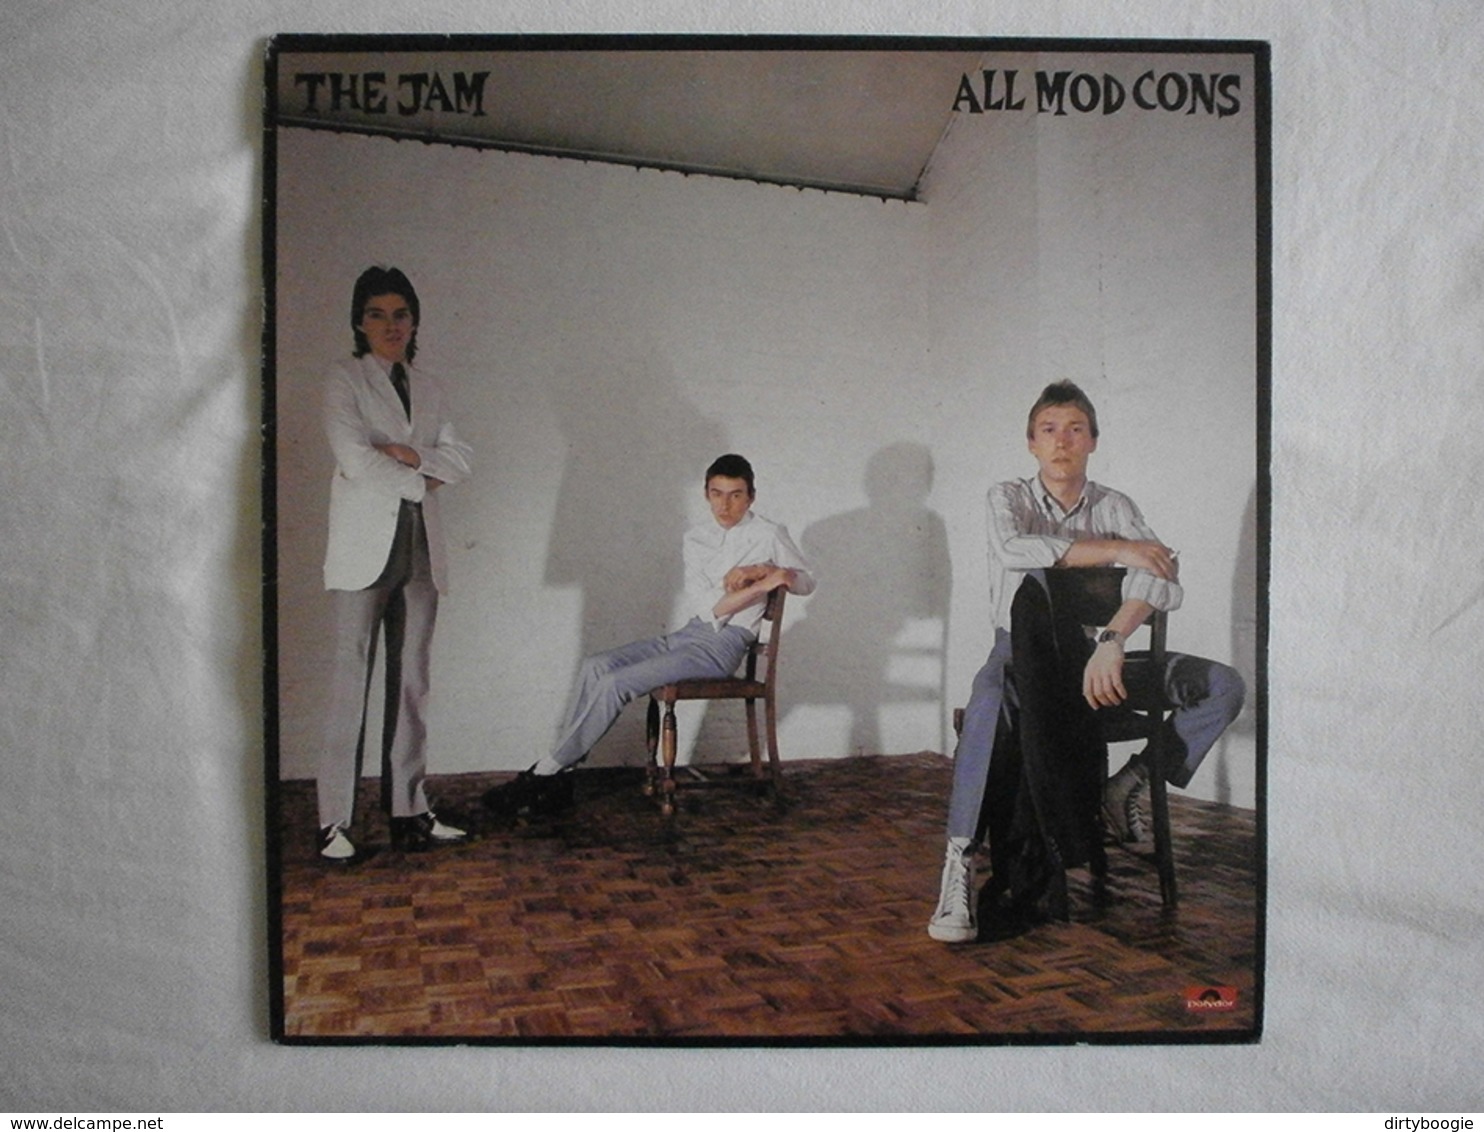 The JAM - All Mod Cons - LP - Rock